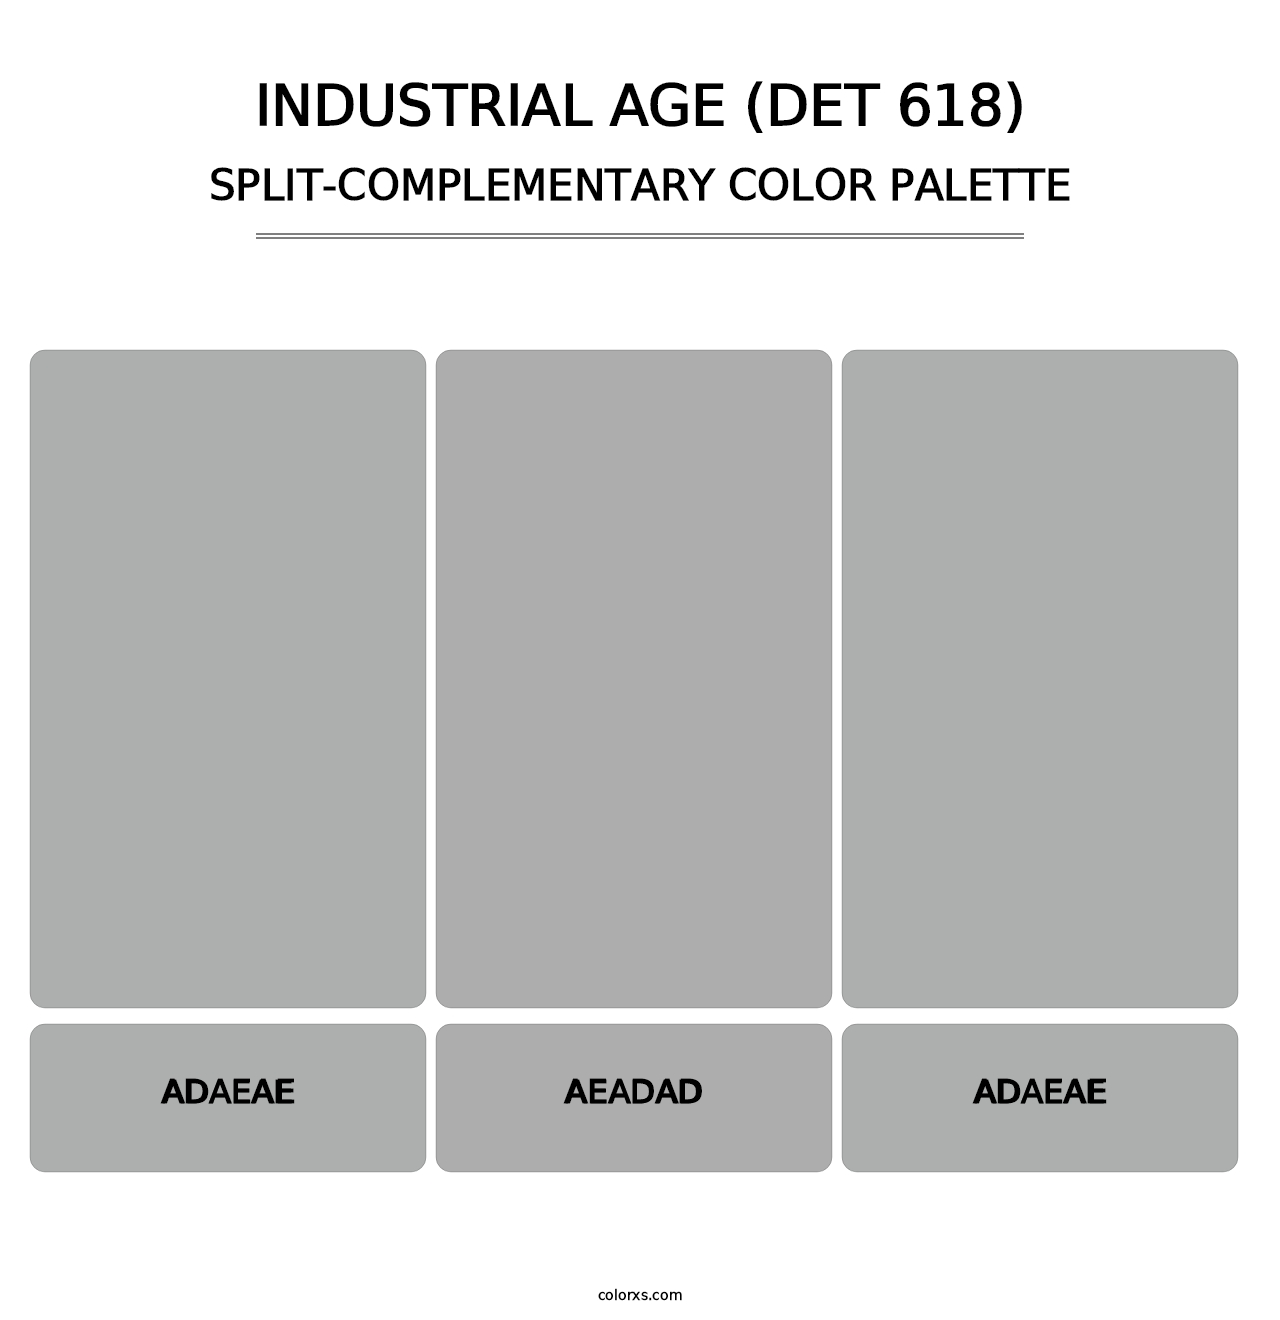 Industrial Age (DET 618) - Split-Complementary Color Palette